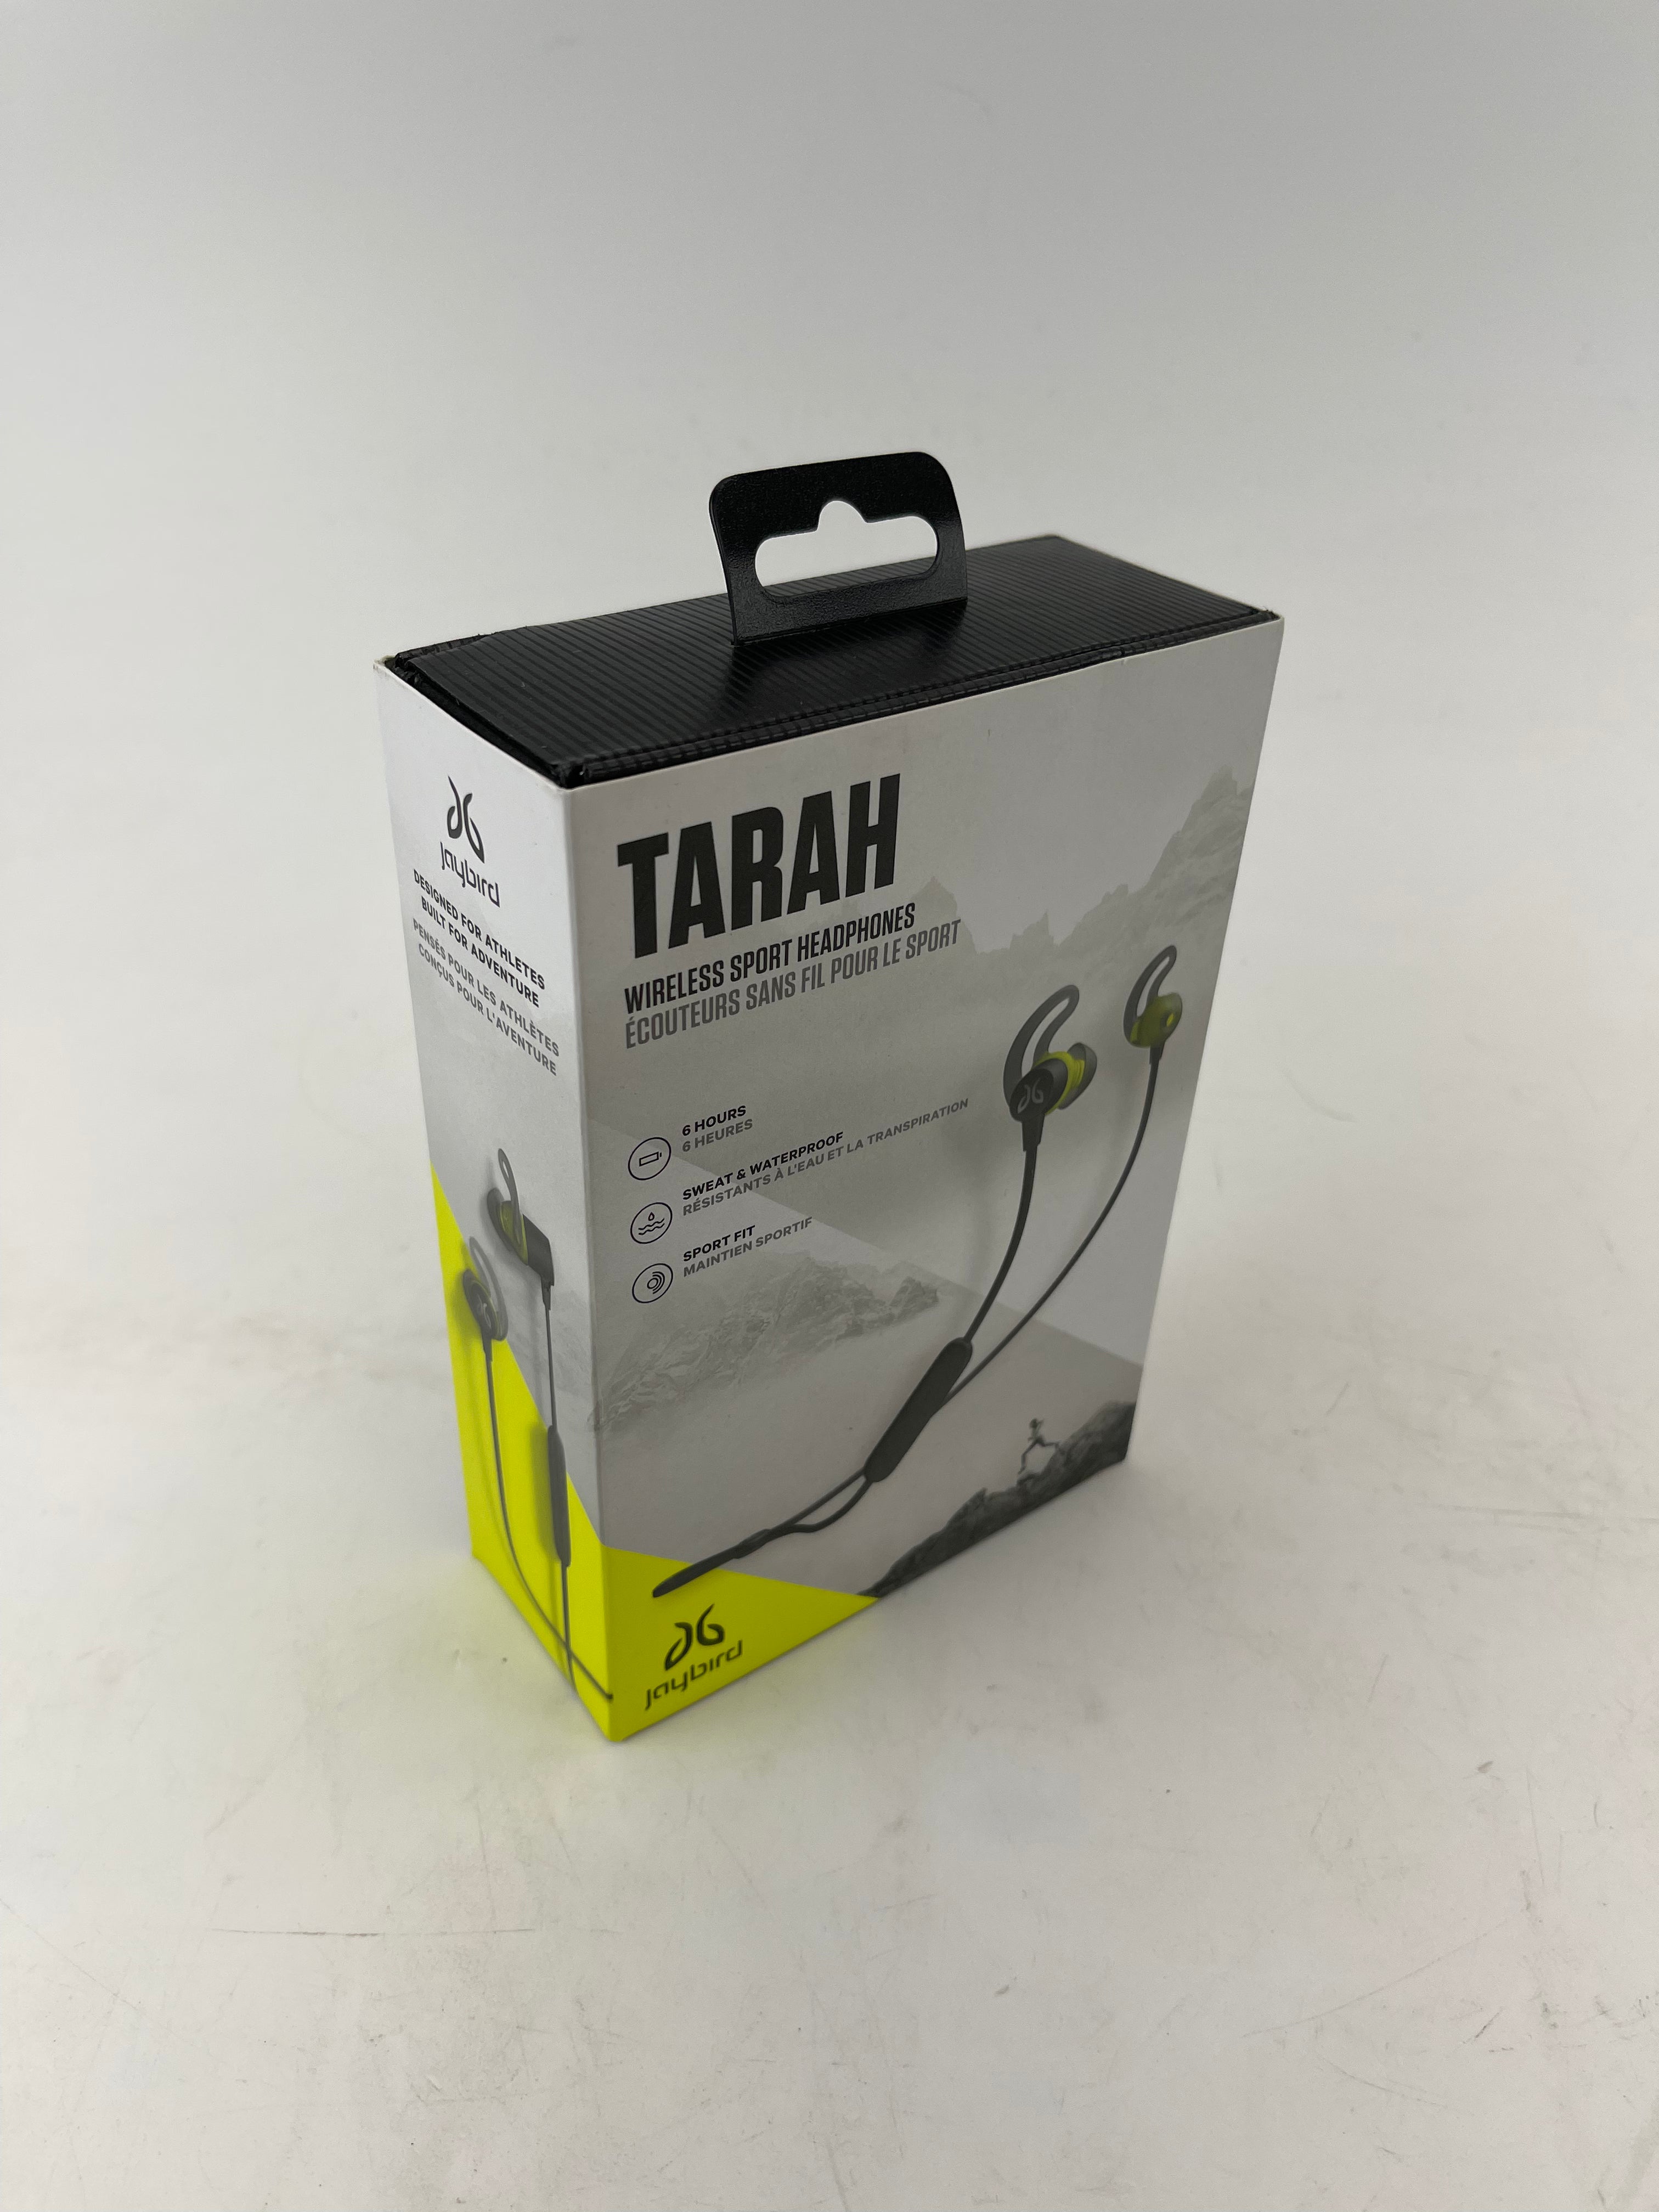 Jaybird Tarah Bluetooth Wireless Sport Headphones